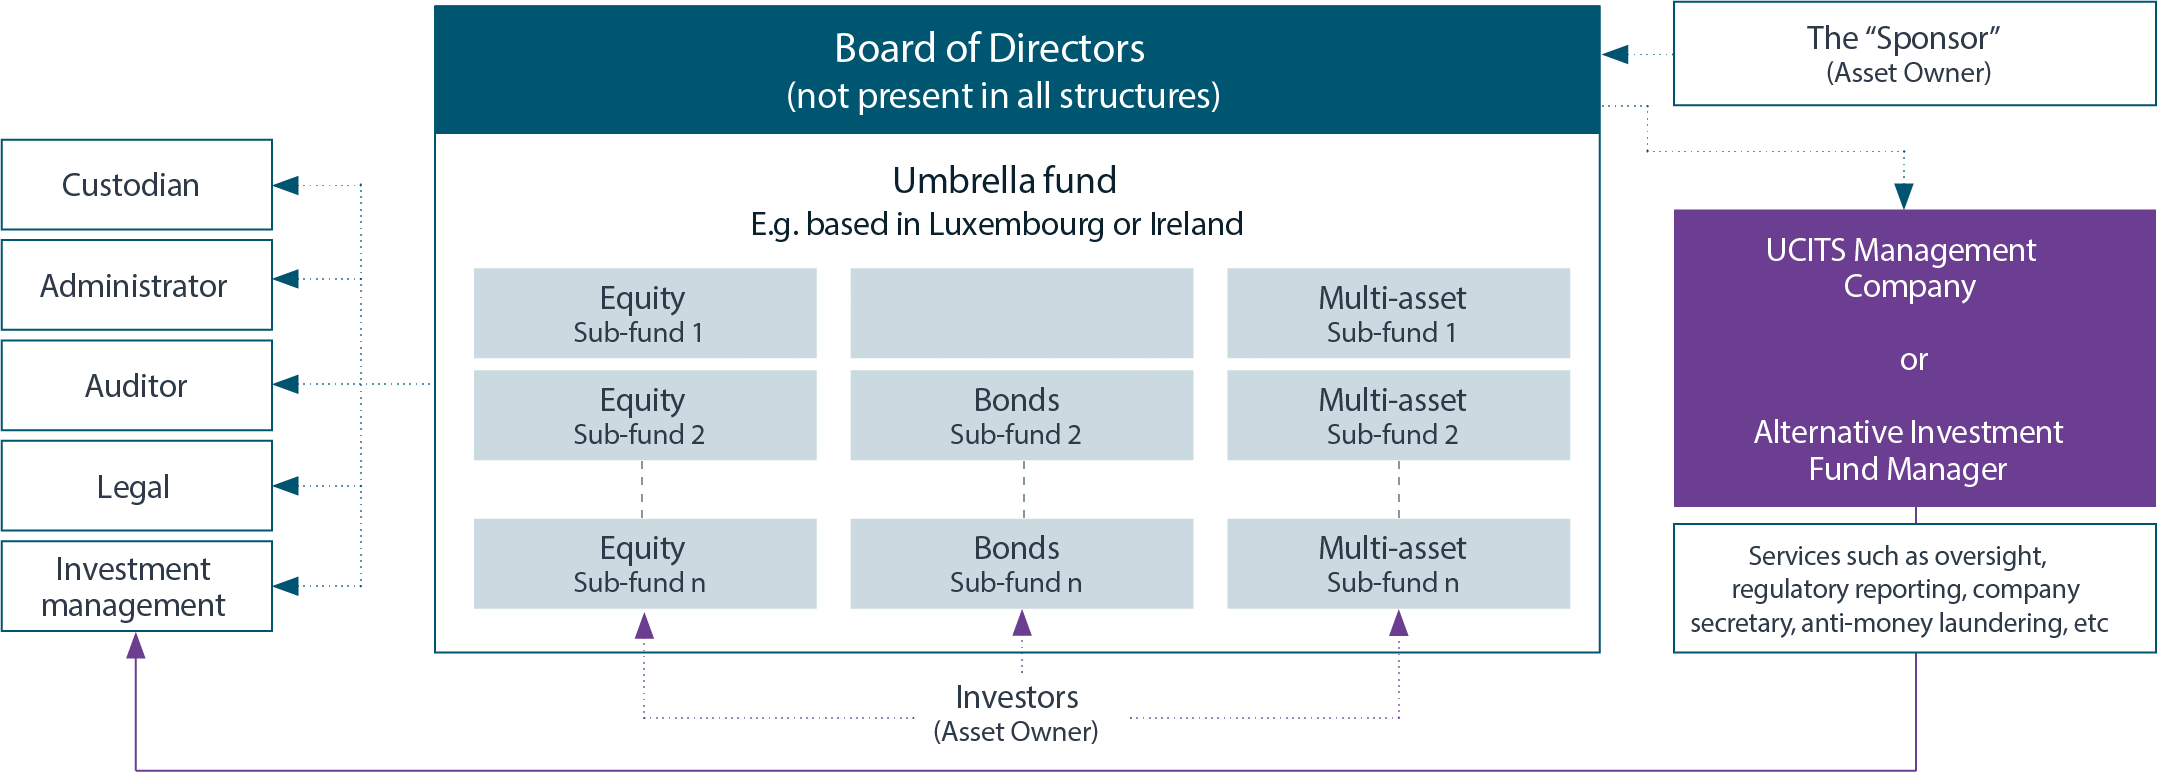 Umbrella fund, typical structure